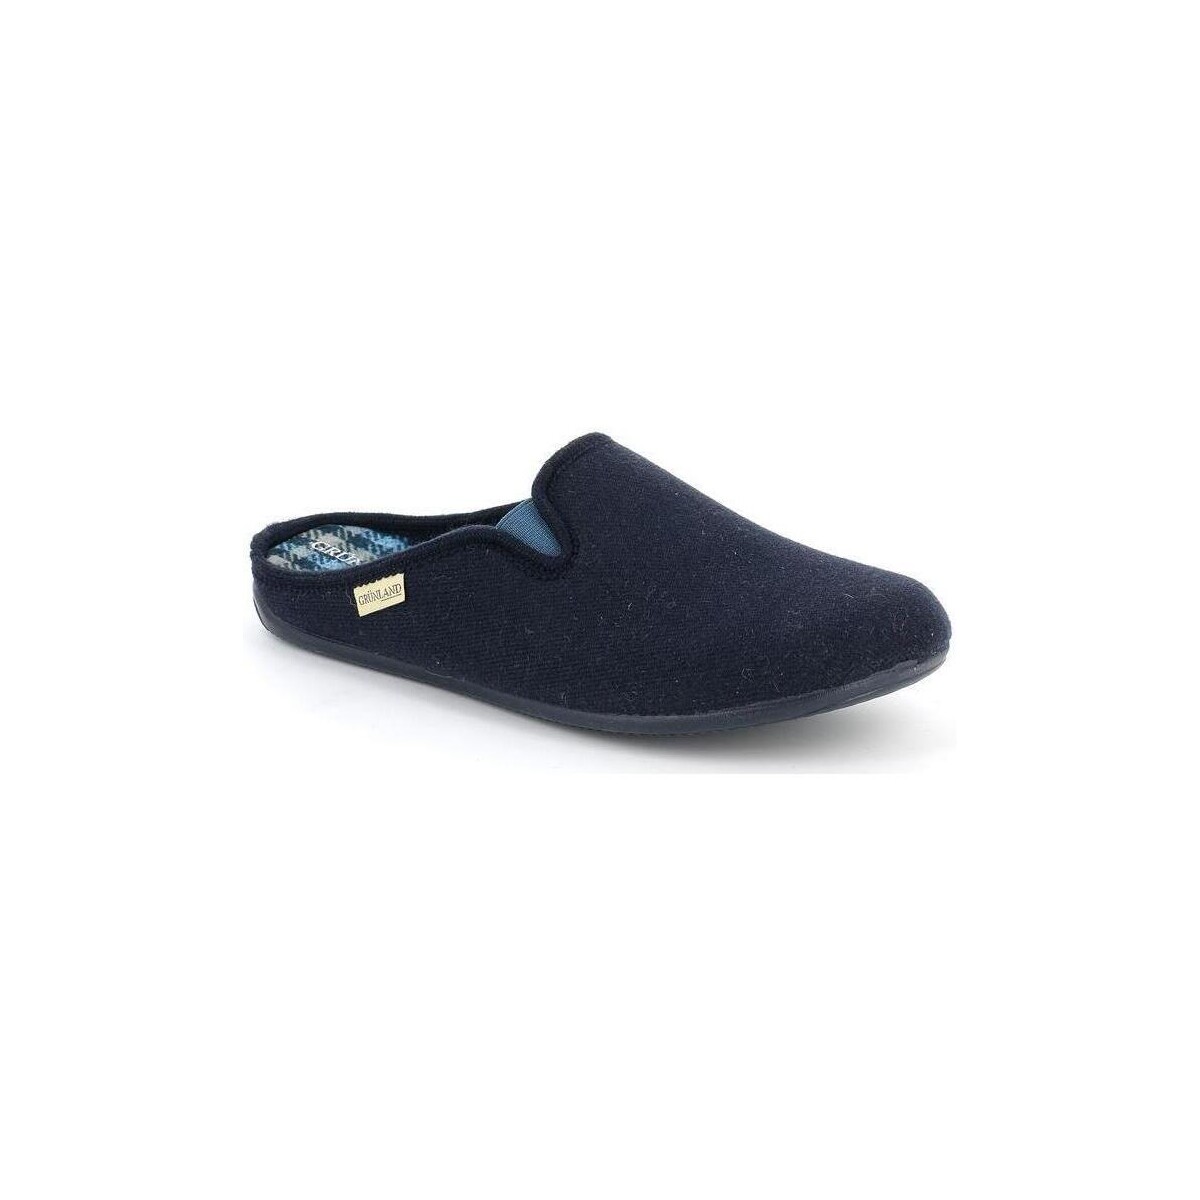 Schoenen Heren Leren slippers Grunland DSG-CI2678 Blauw